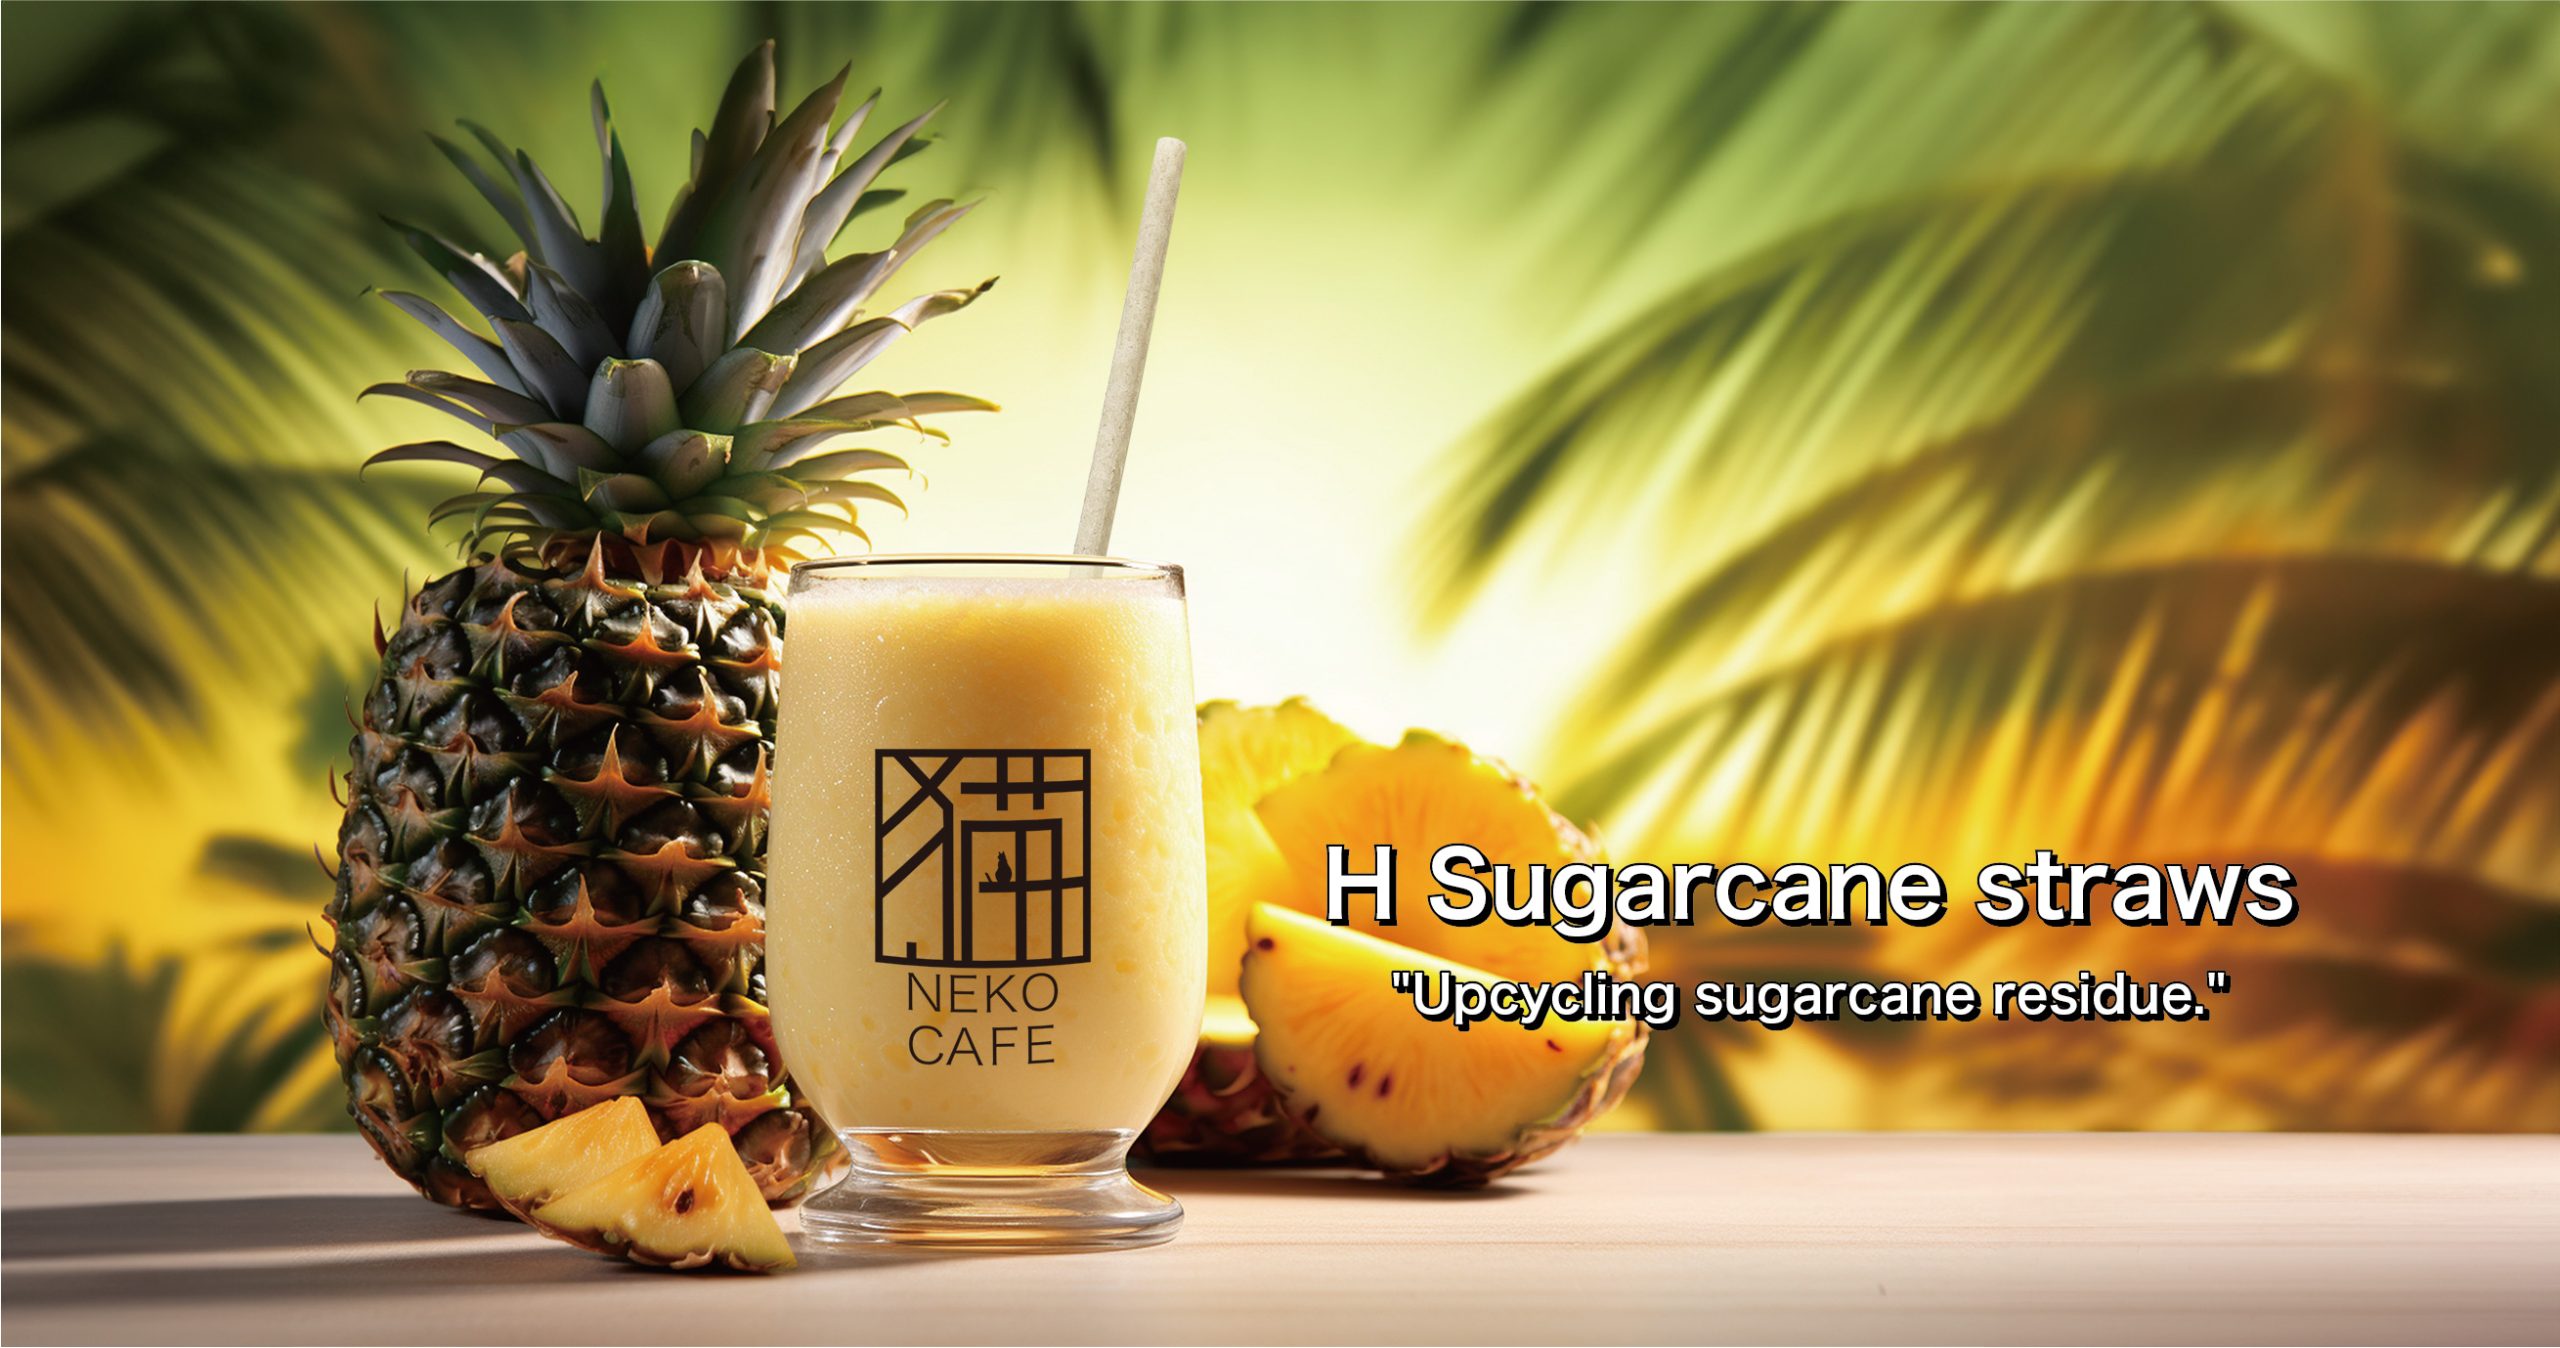 H sugarcane straw